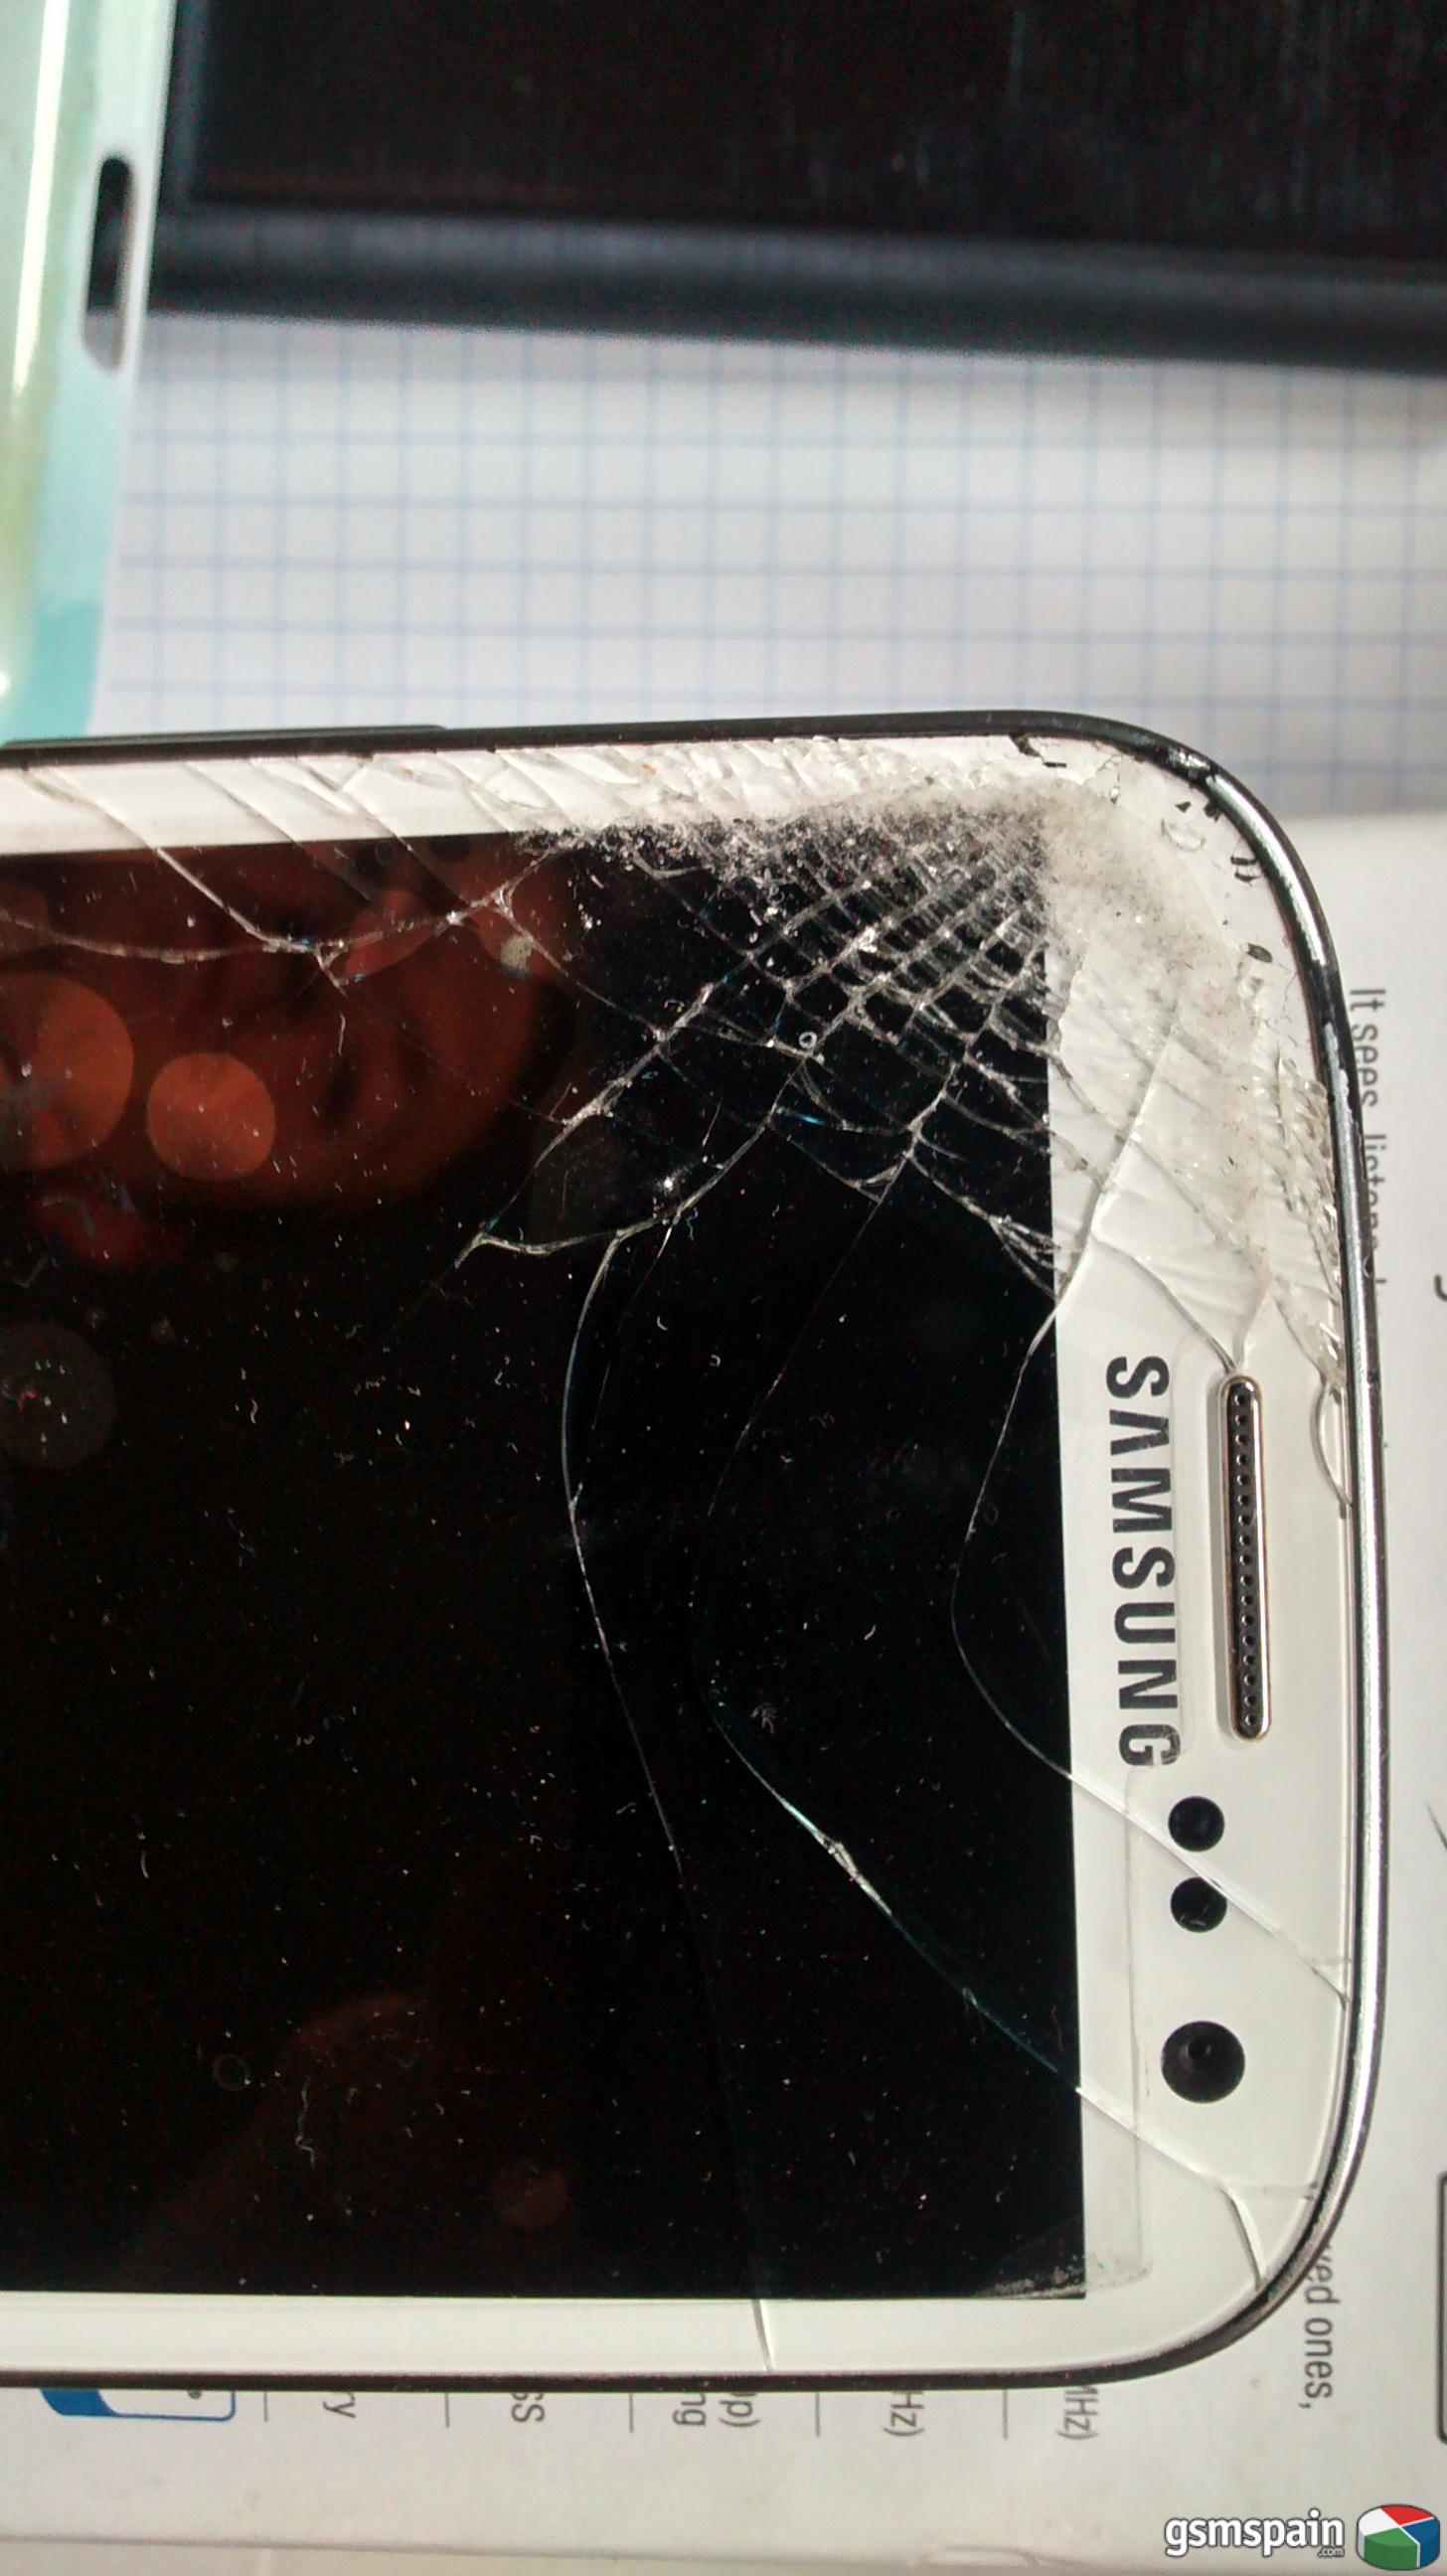 [VENDO] Samsung Galaxy S3 (pantalla rota)